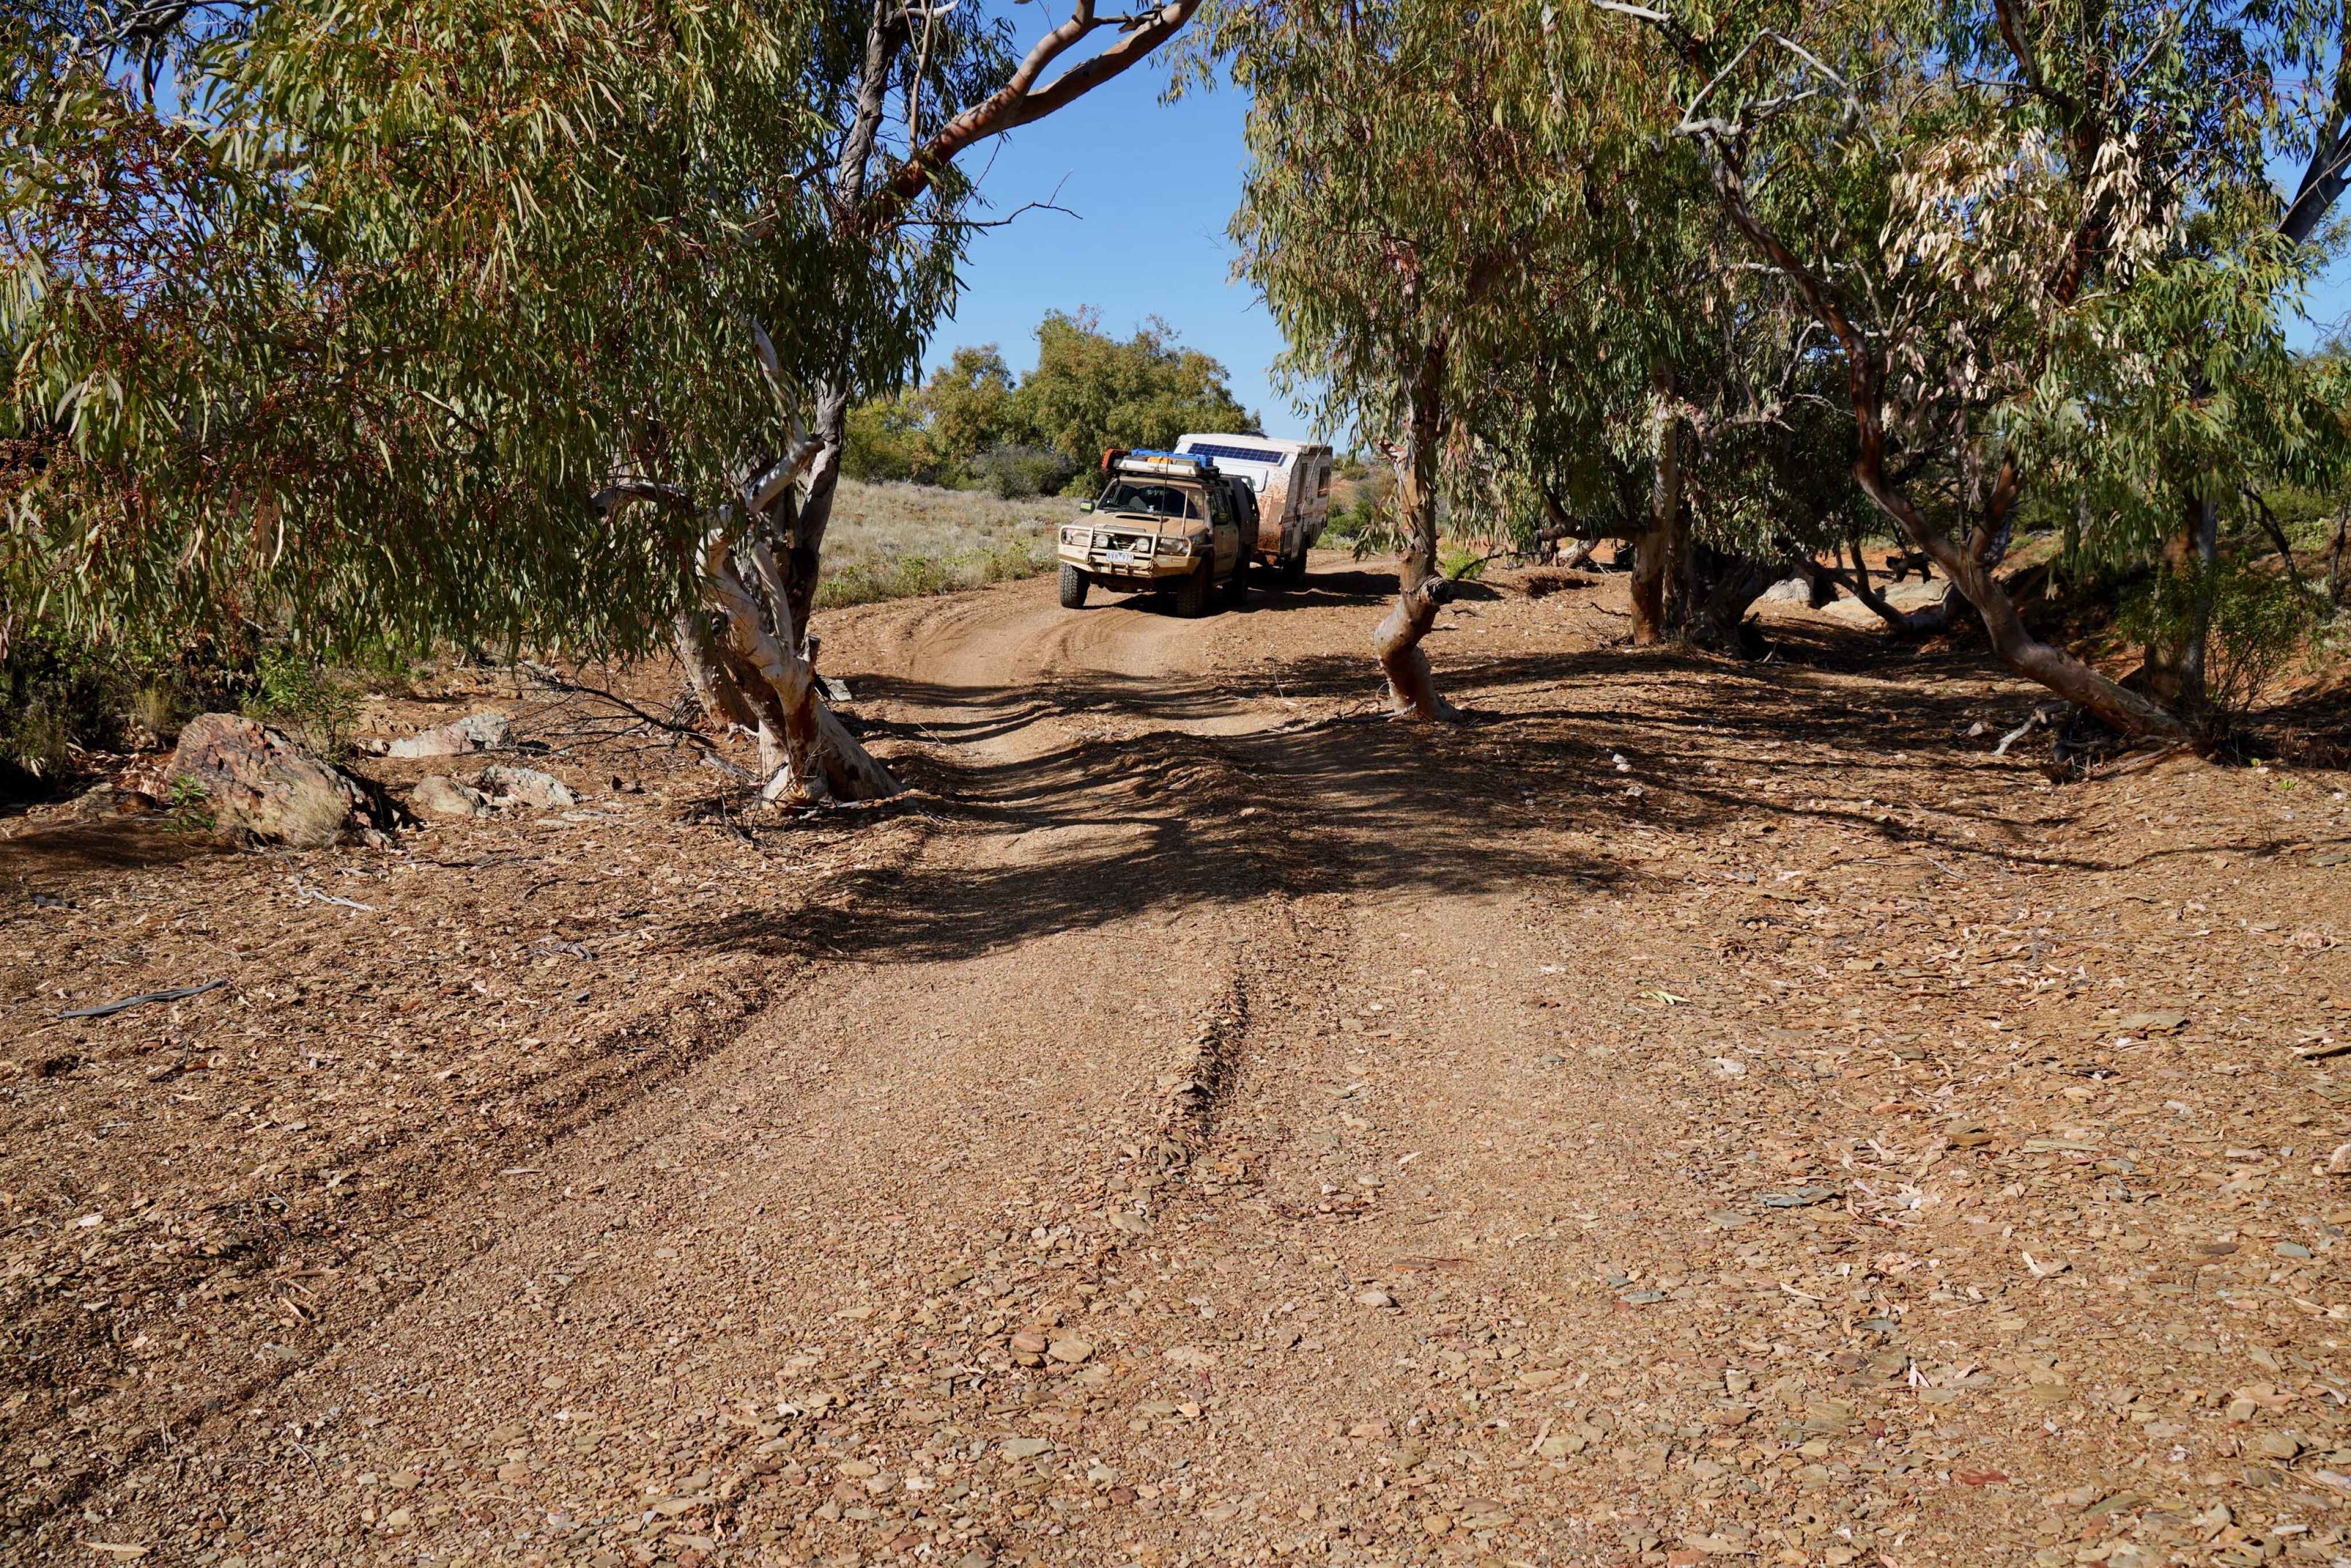 062e253a/4x4 australia explore cooper creek sa ttc024 track follows the creek for miles jpg